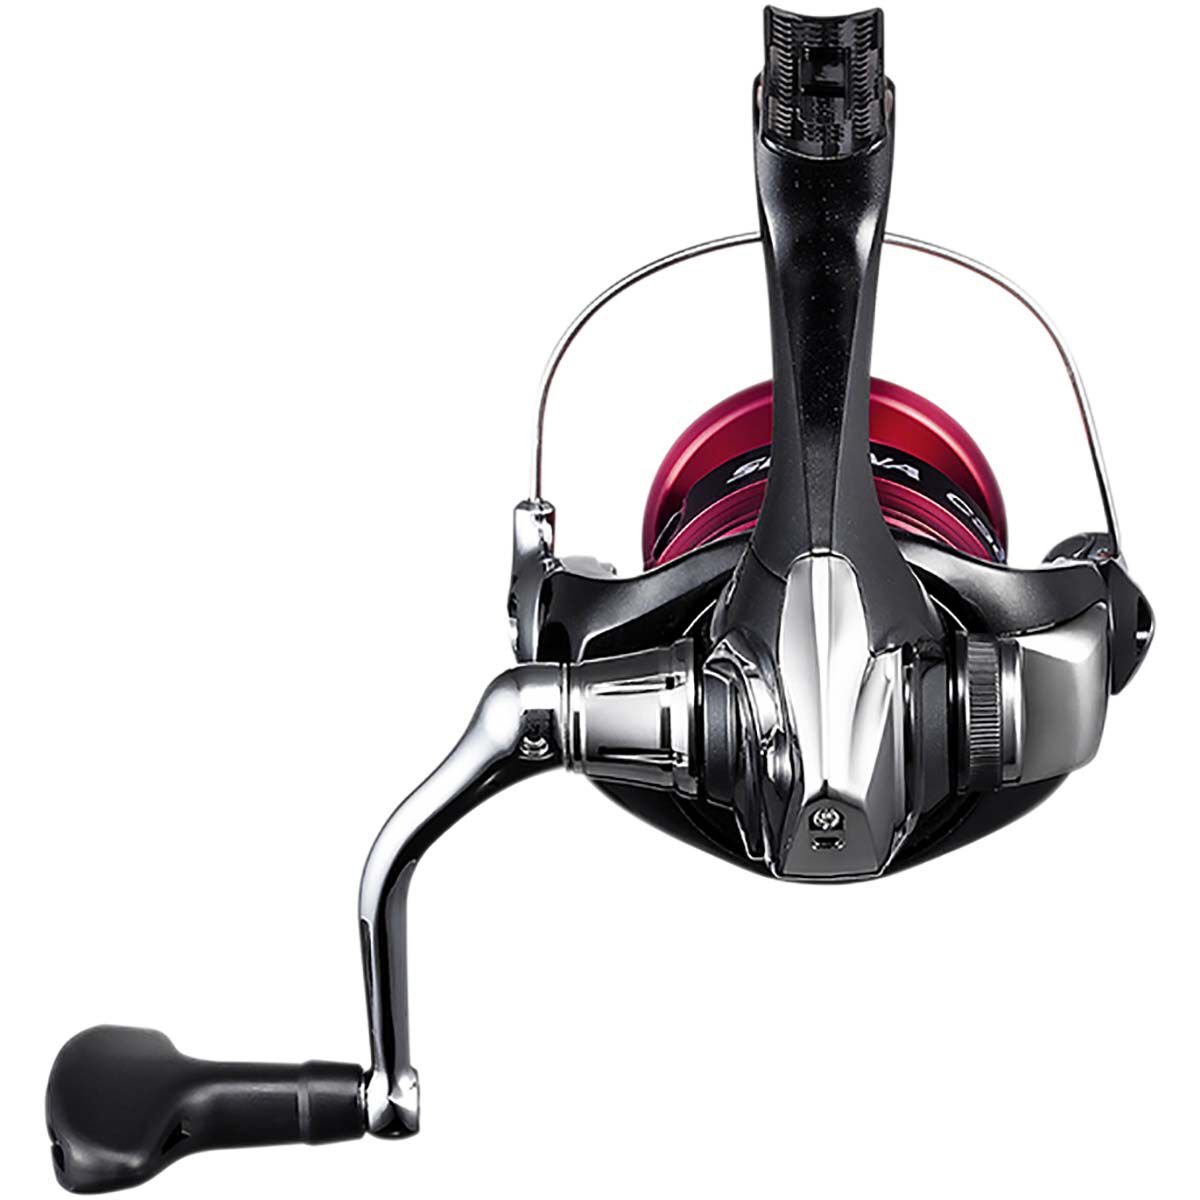 Brand New Shimano Sienna FG 1000 Spinning Fishing Reel, Sports Equipment,  Fishing on Carousell